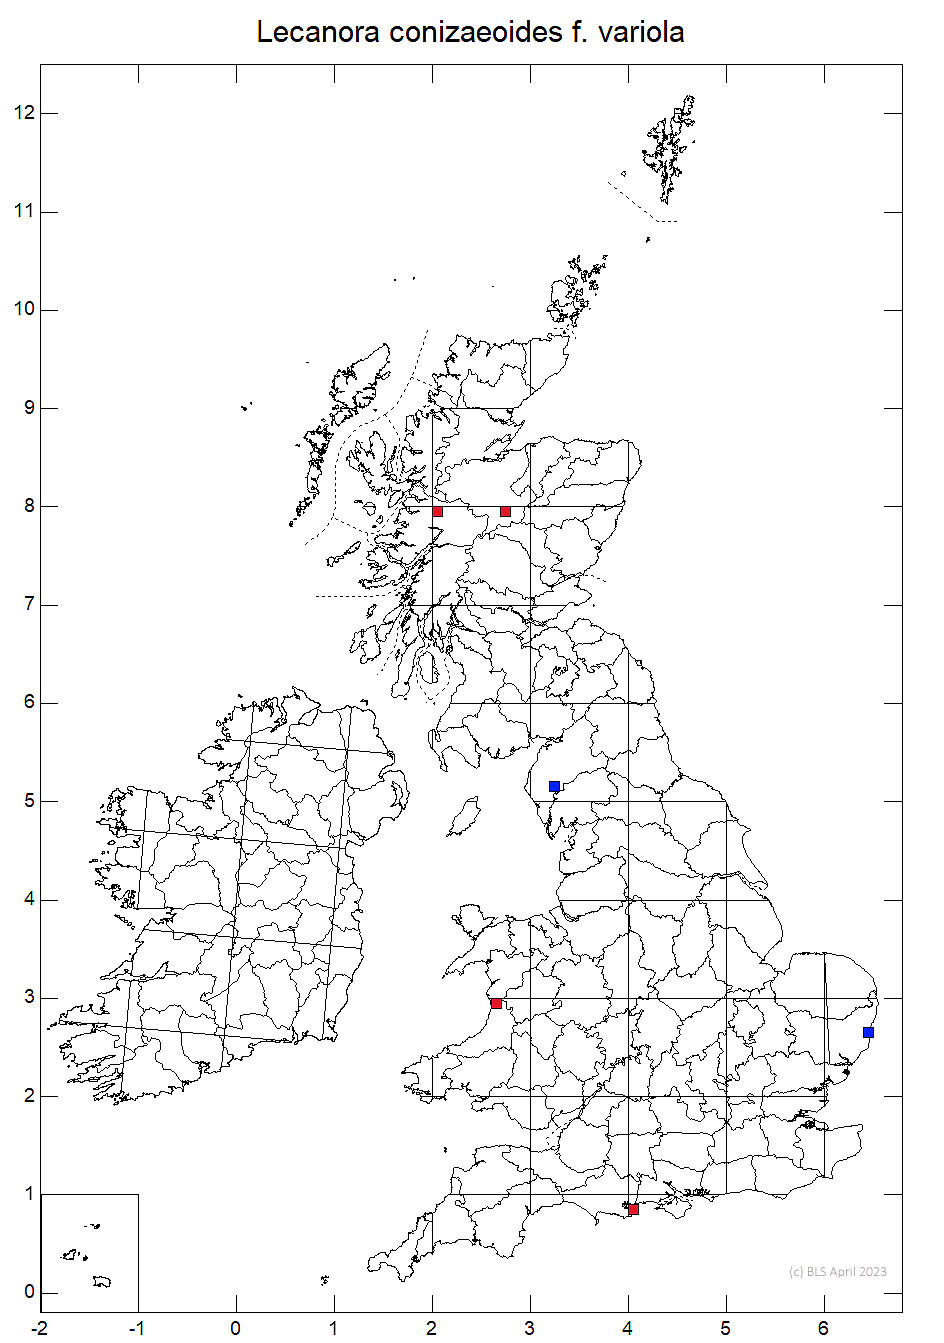 Lecanora conizaeoides f. variola 10km sq distribution map